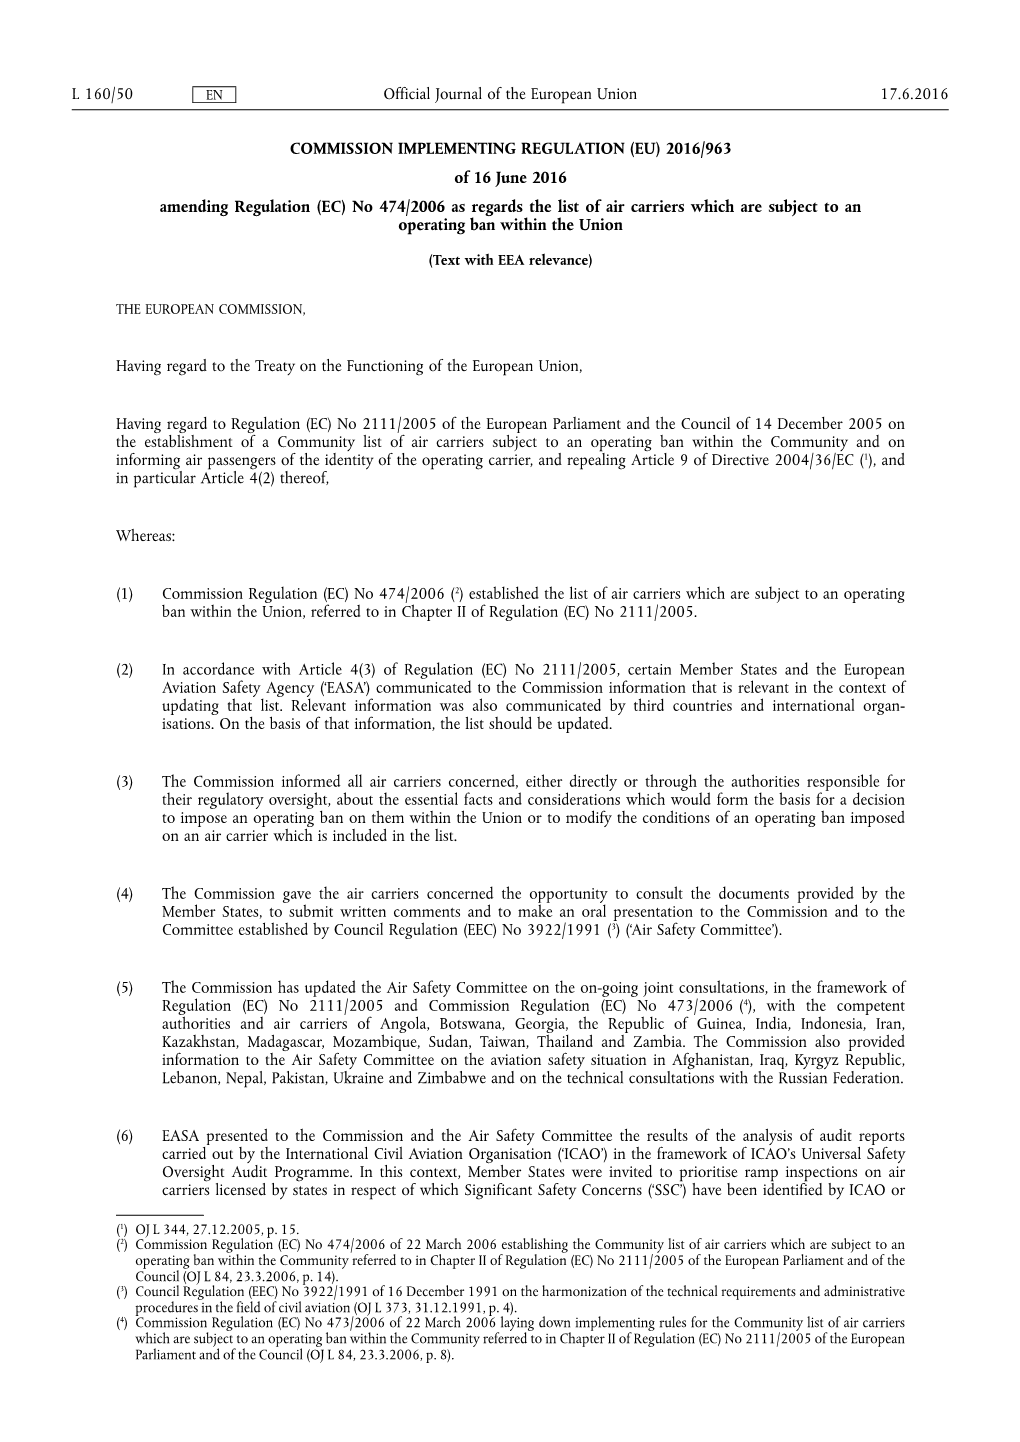 Commission Implementing Regulation (Eu) 2016